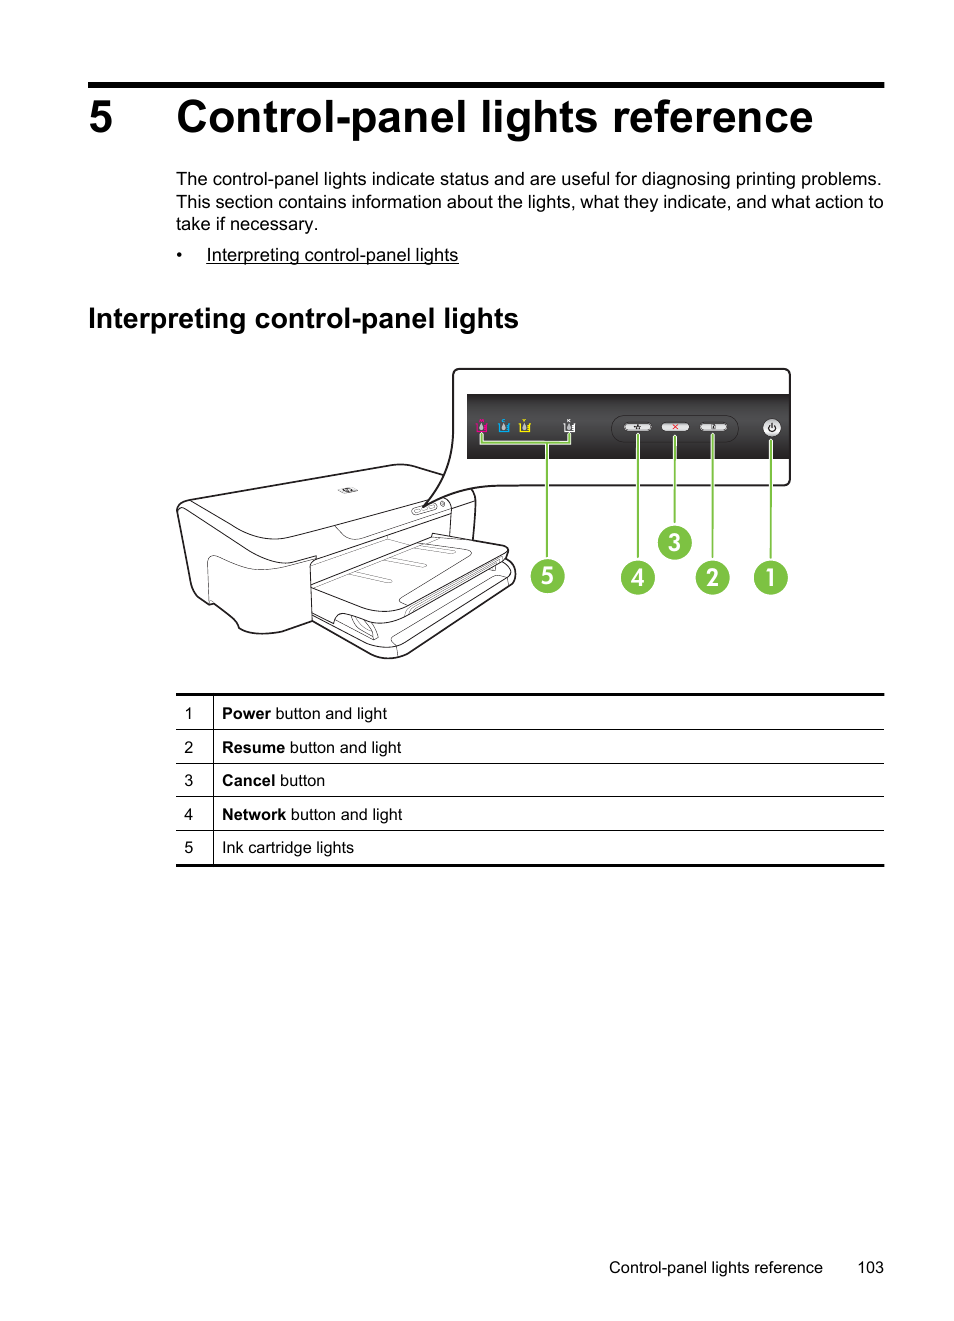 Control-panel lights reference, Interpreting control-panel lights, 5